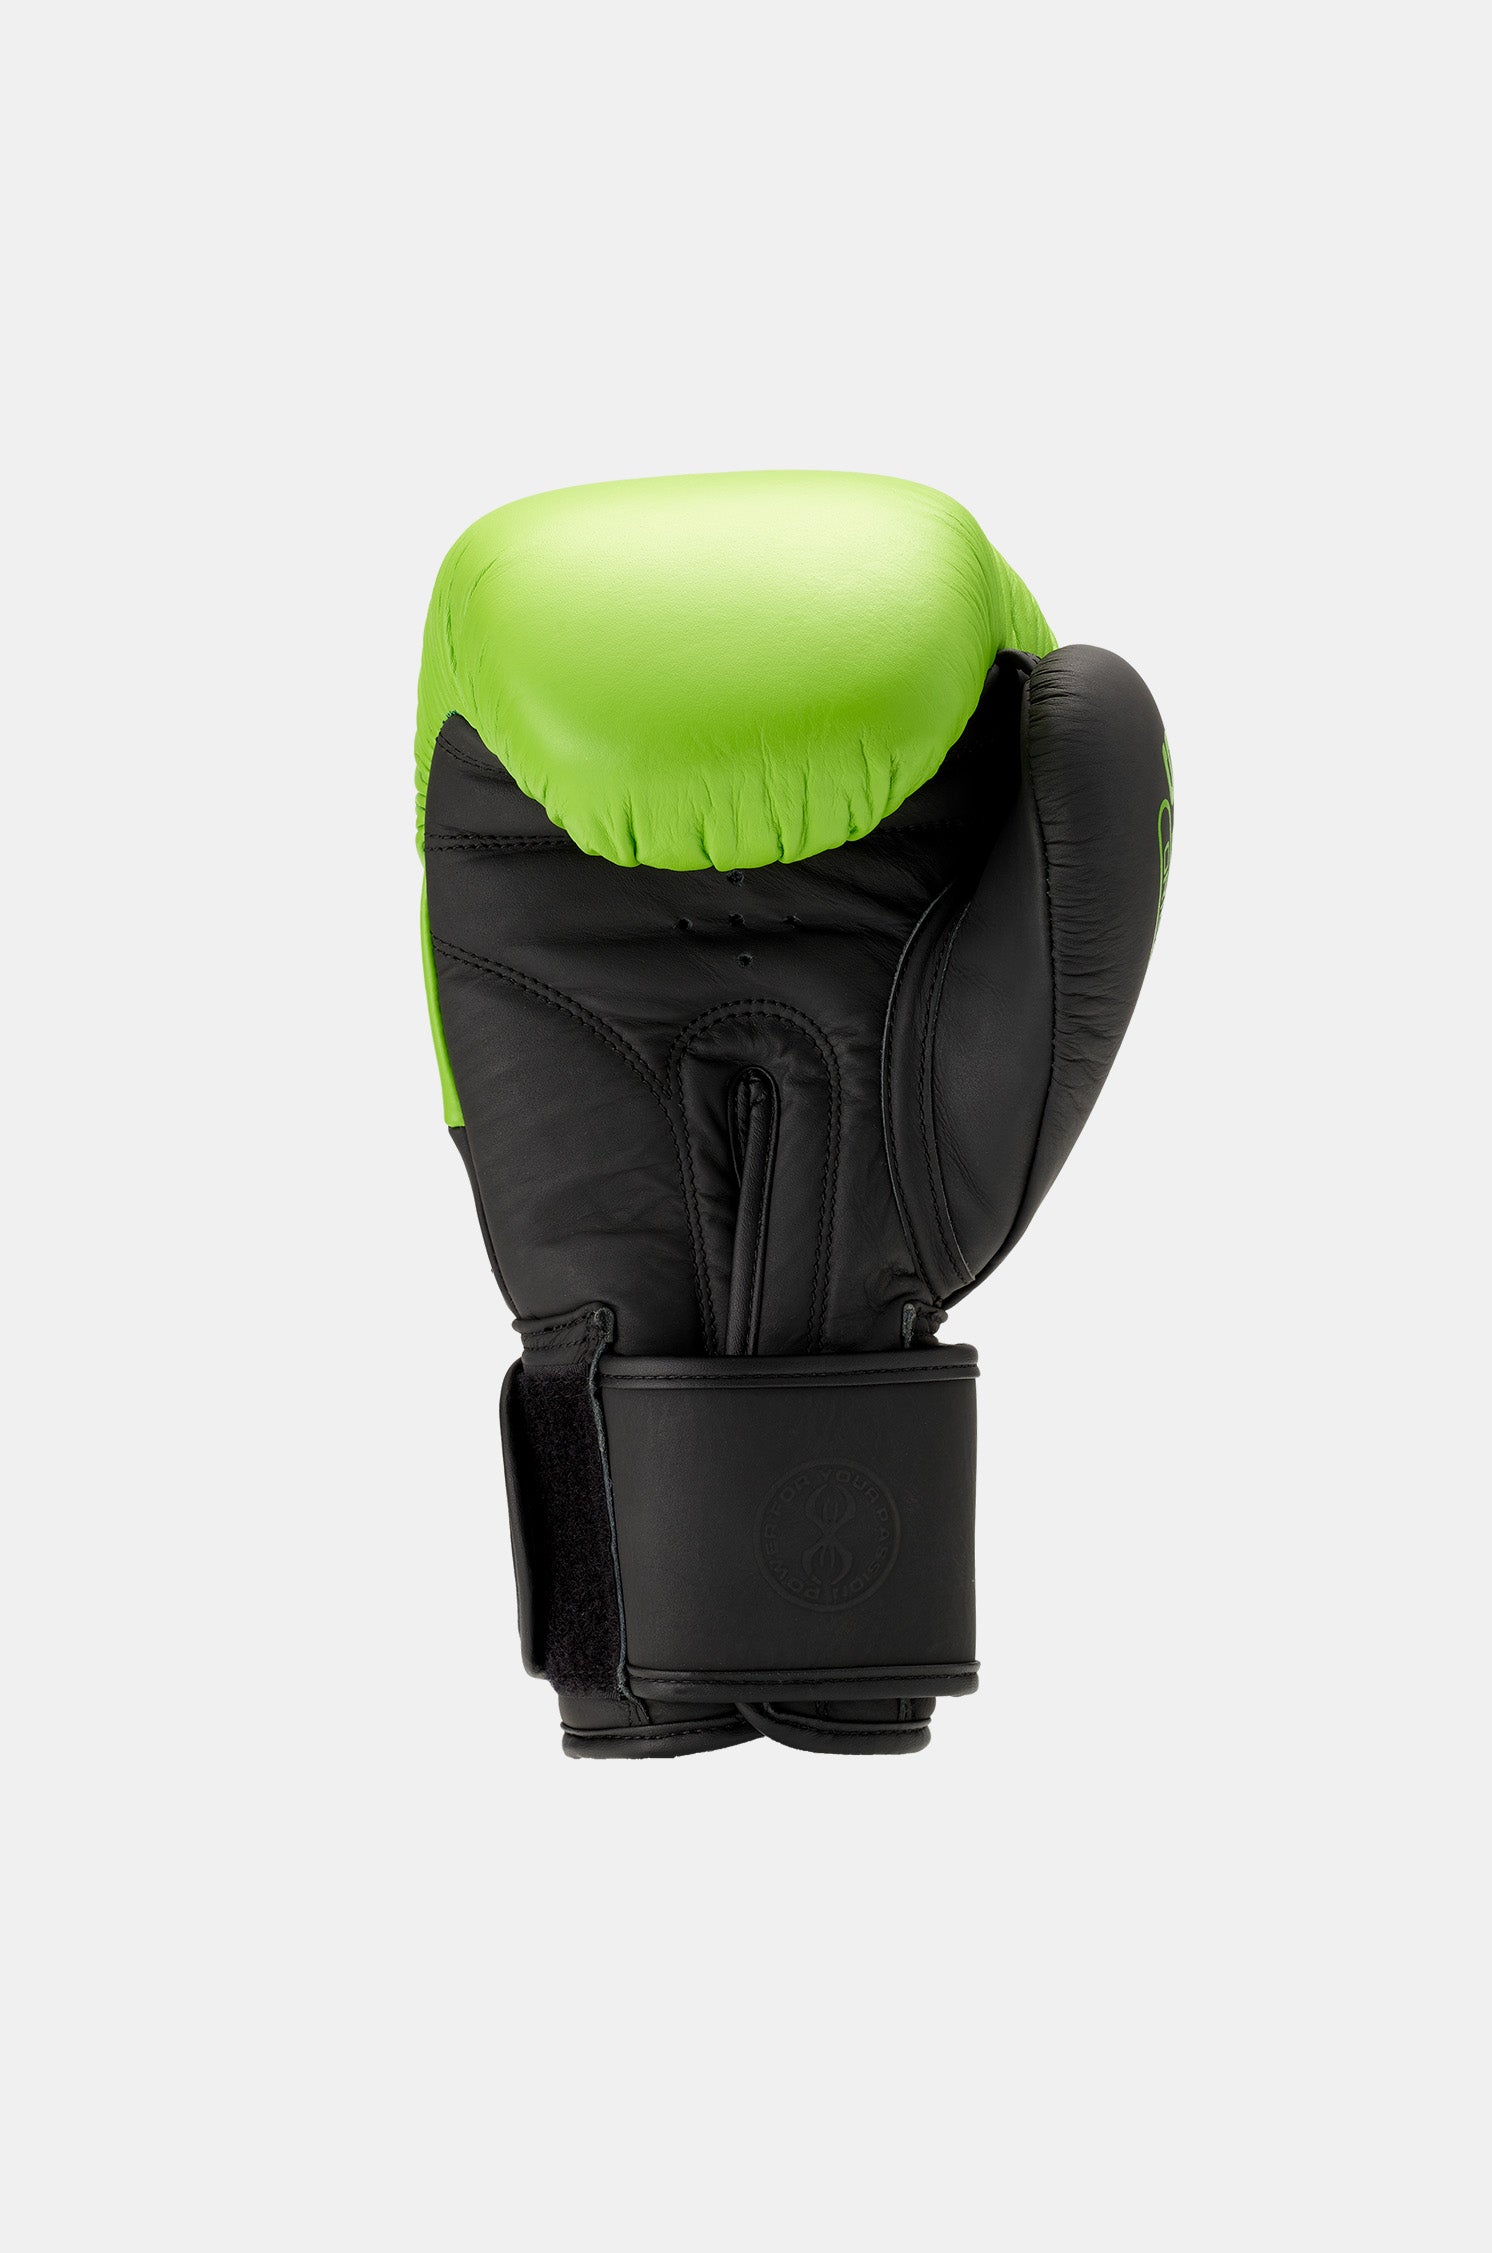 STING Orion Boxing Gloves Black Green